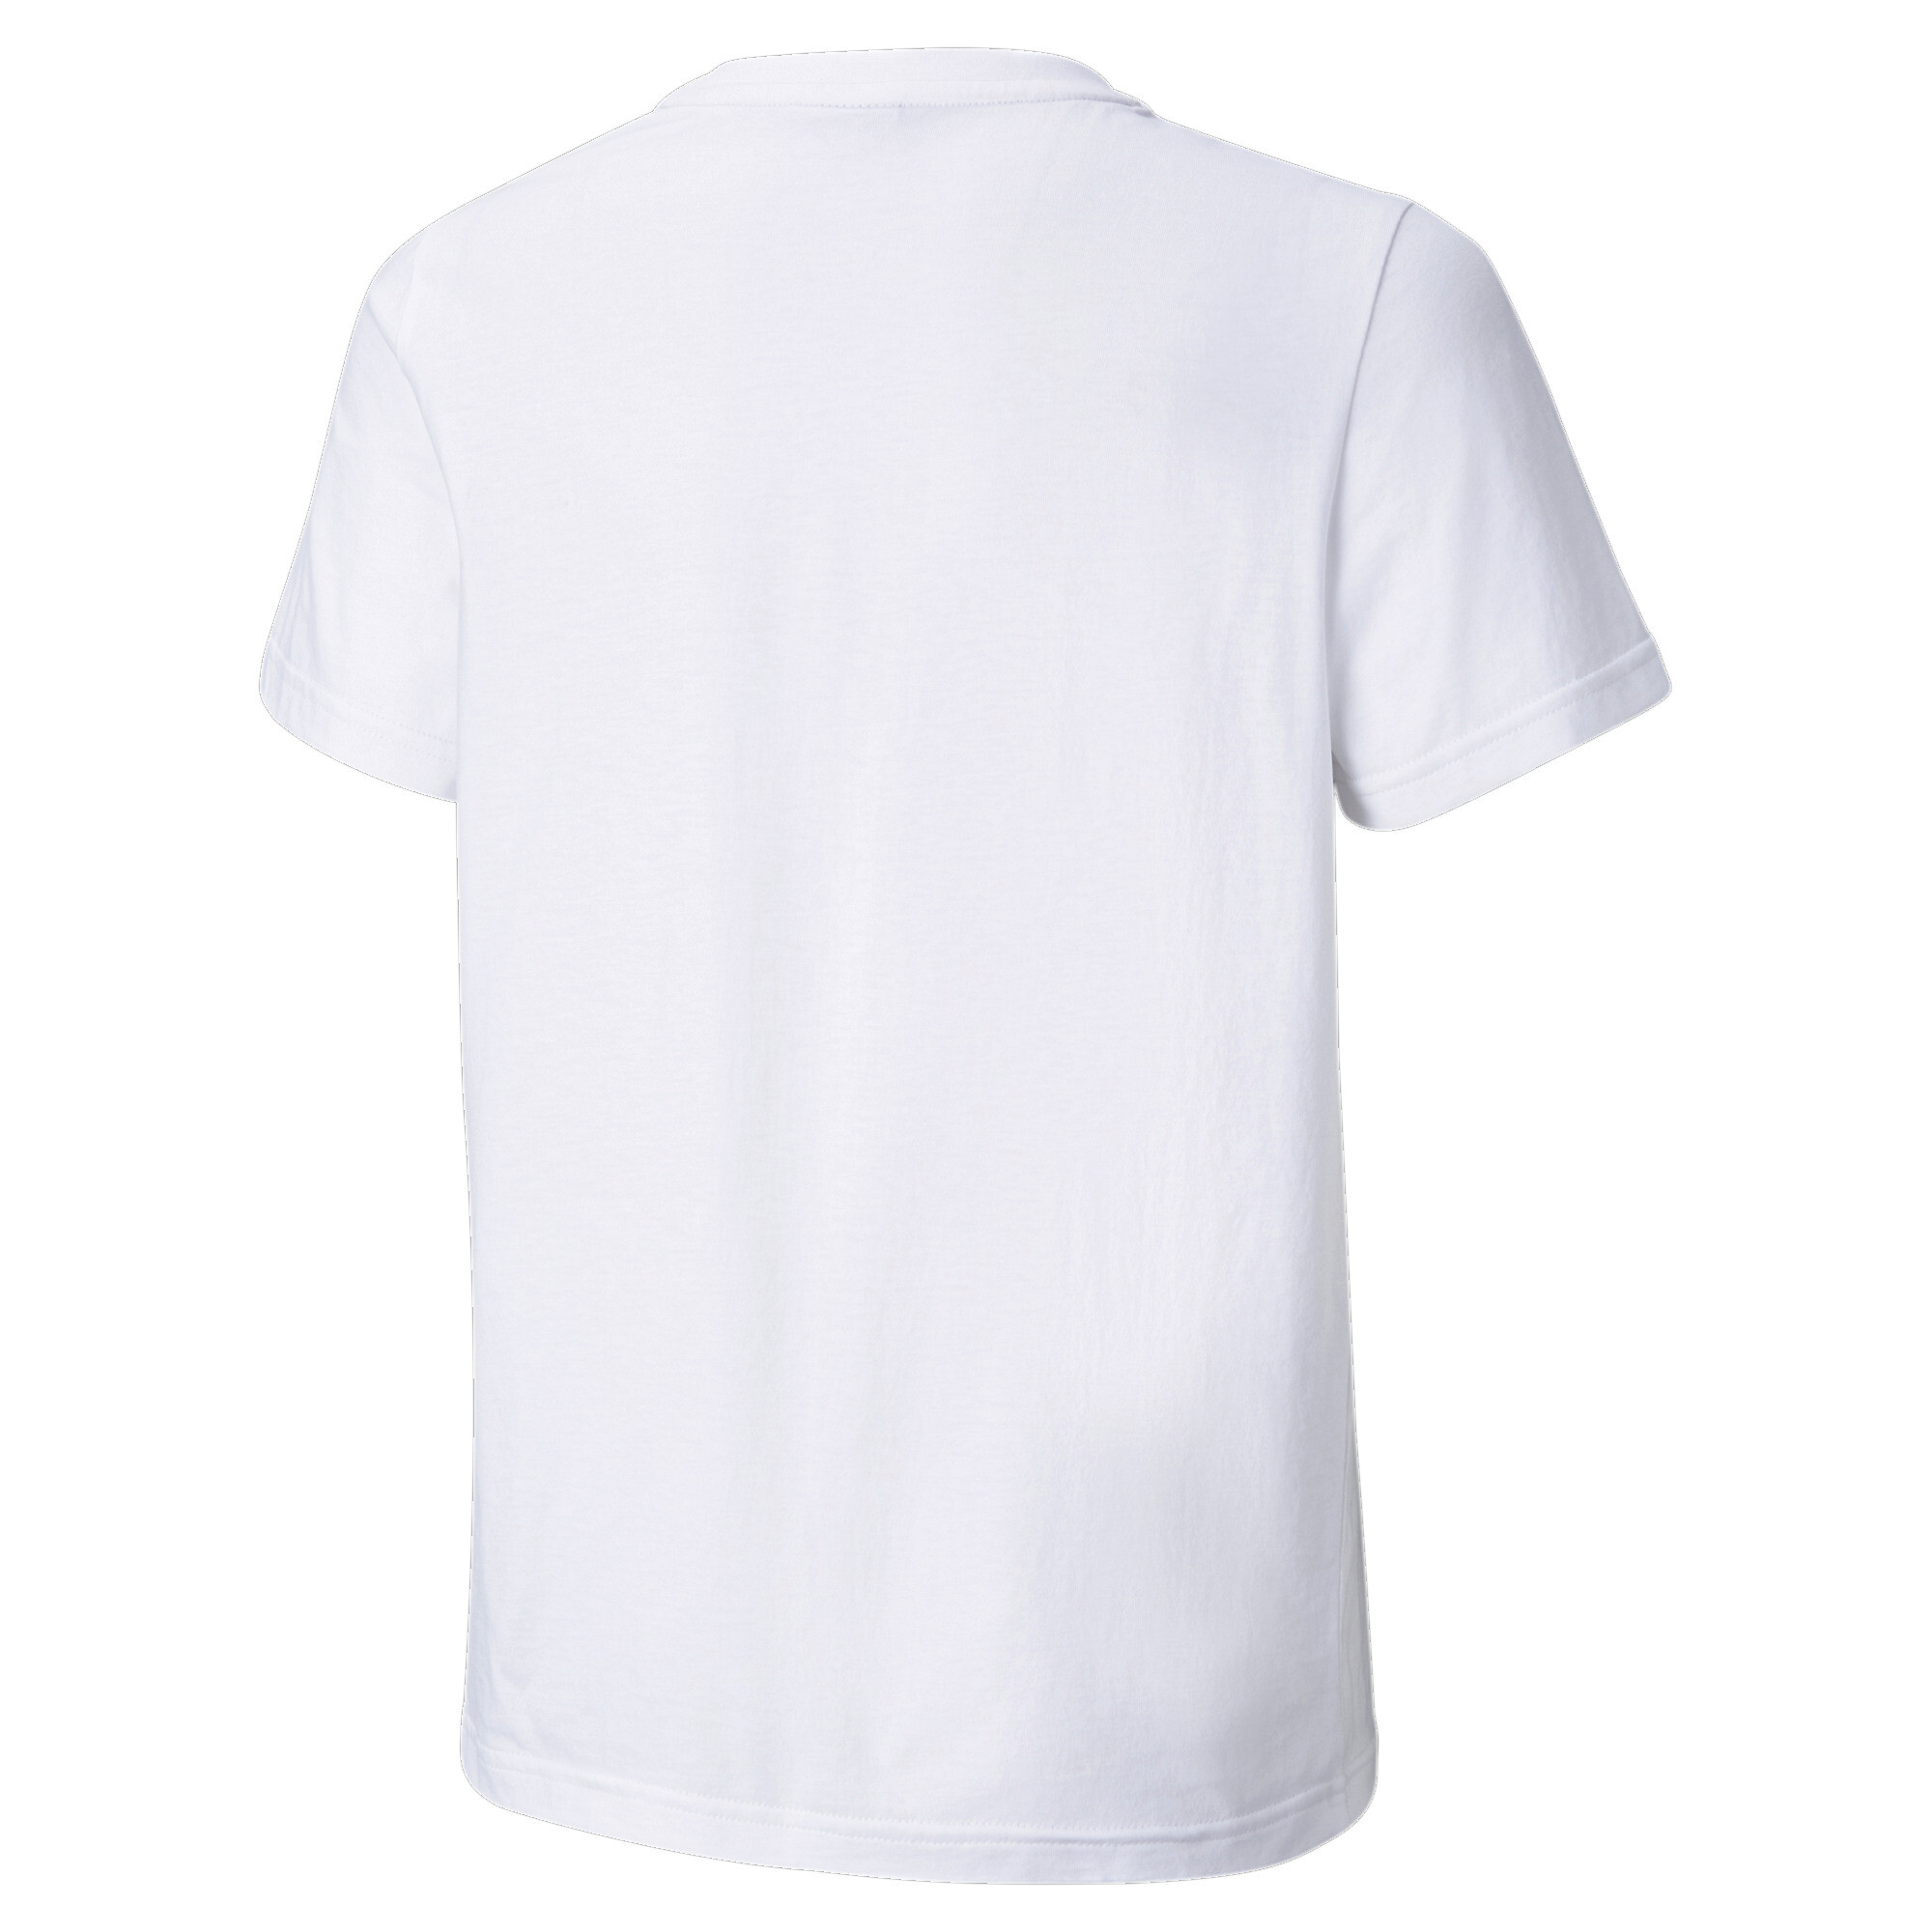 PUMA Classics B T-Shirt In White, Size 11-12 Youth